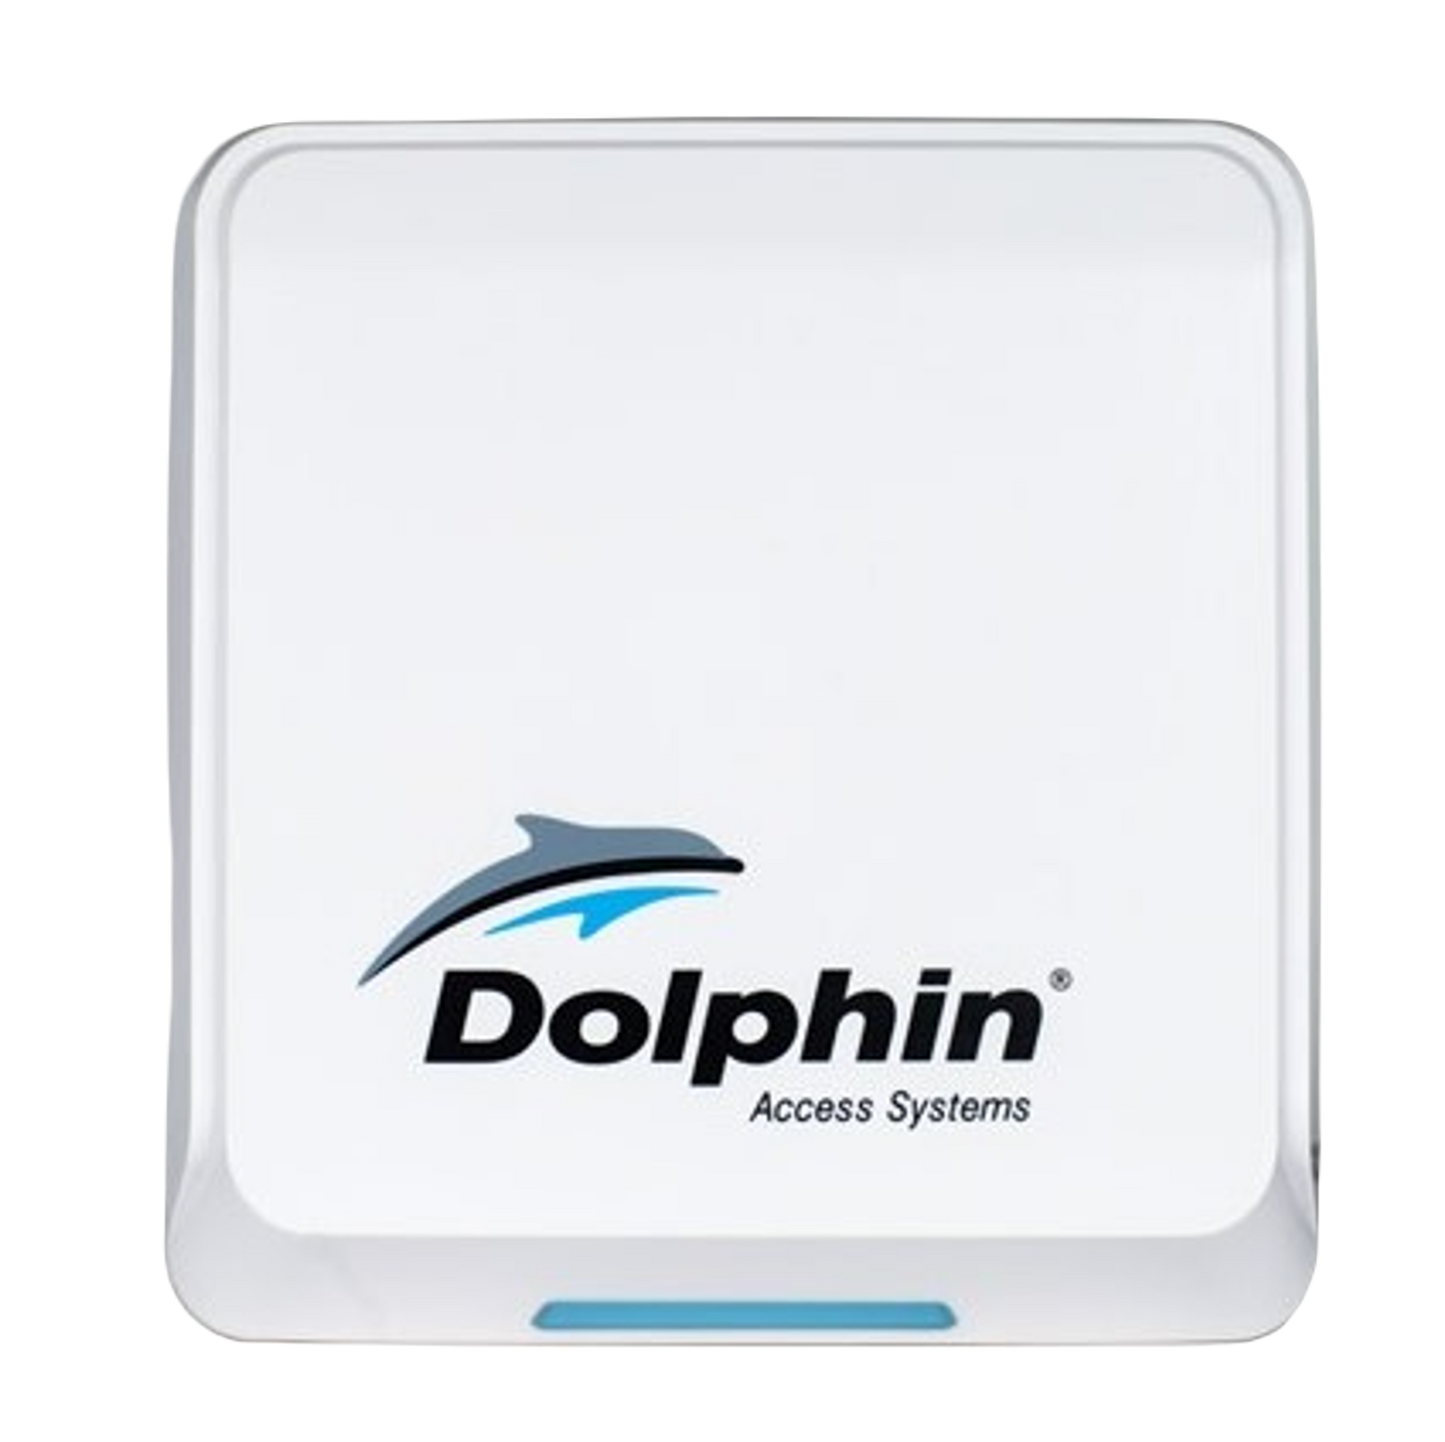 Dolphin UHF Tag Dolphin UHF Tag RFID TAG Dolphin reader UHF sticker UHF Reader UHF Rental UHF WS tag UHF CS card passive UHF Tag copy online free rental parking tag clone